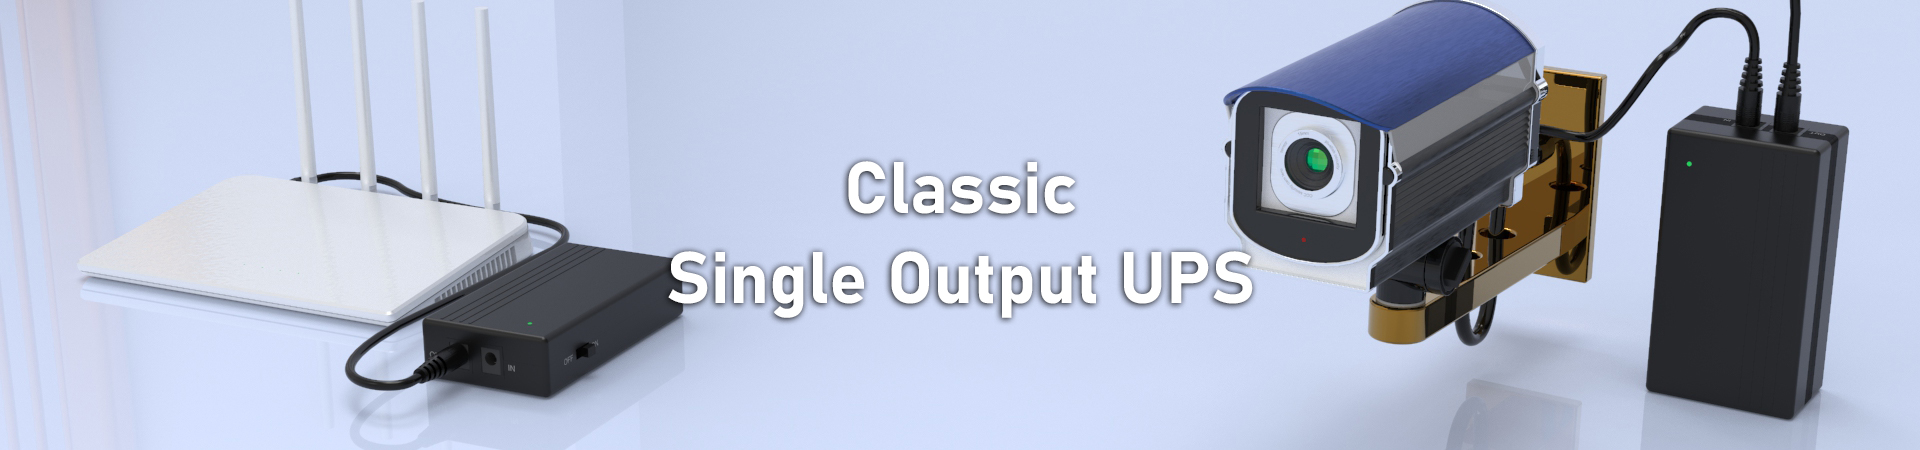 Classic single Output ups